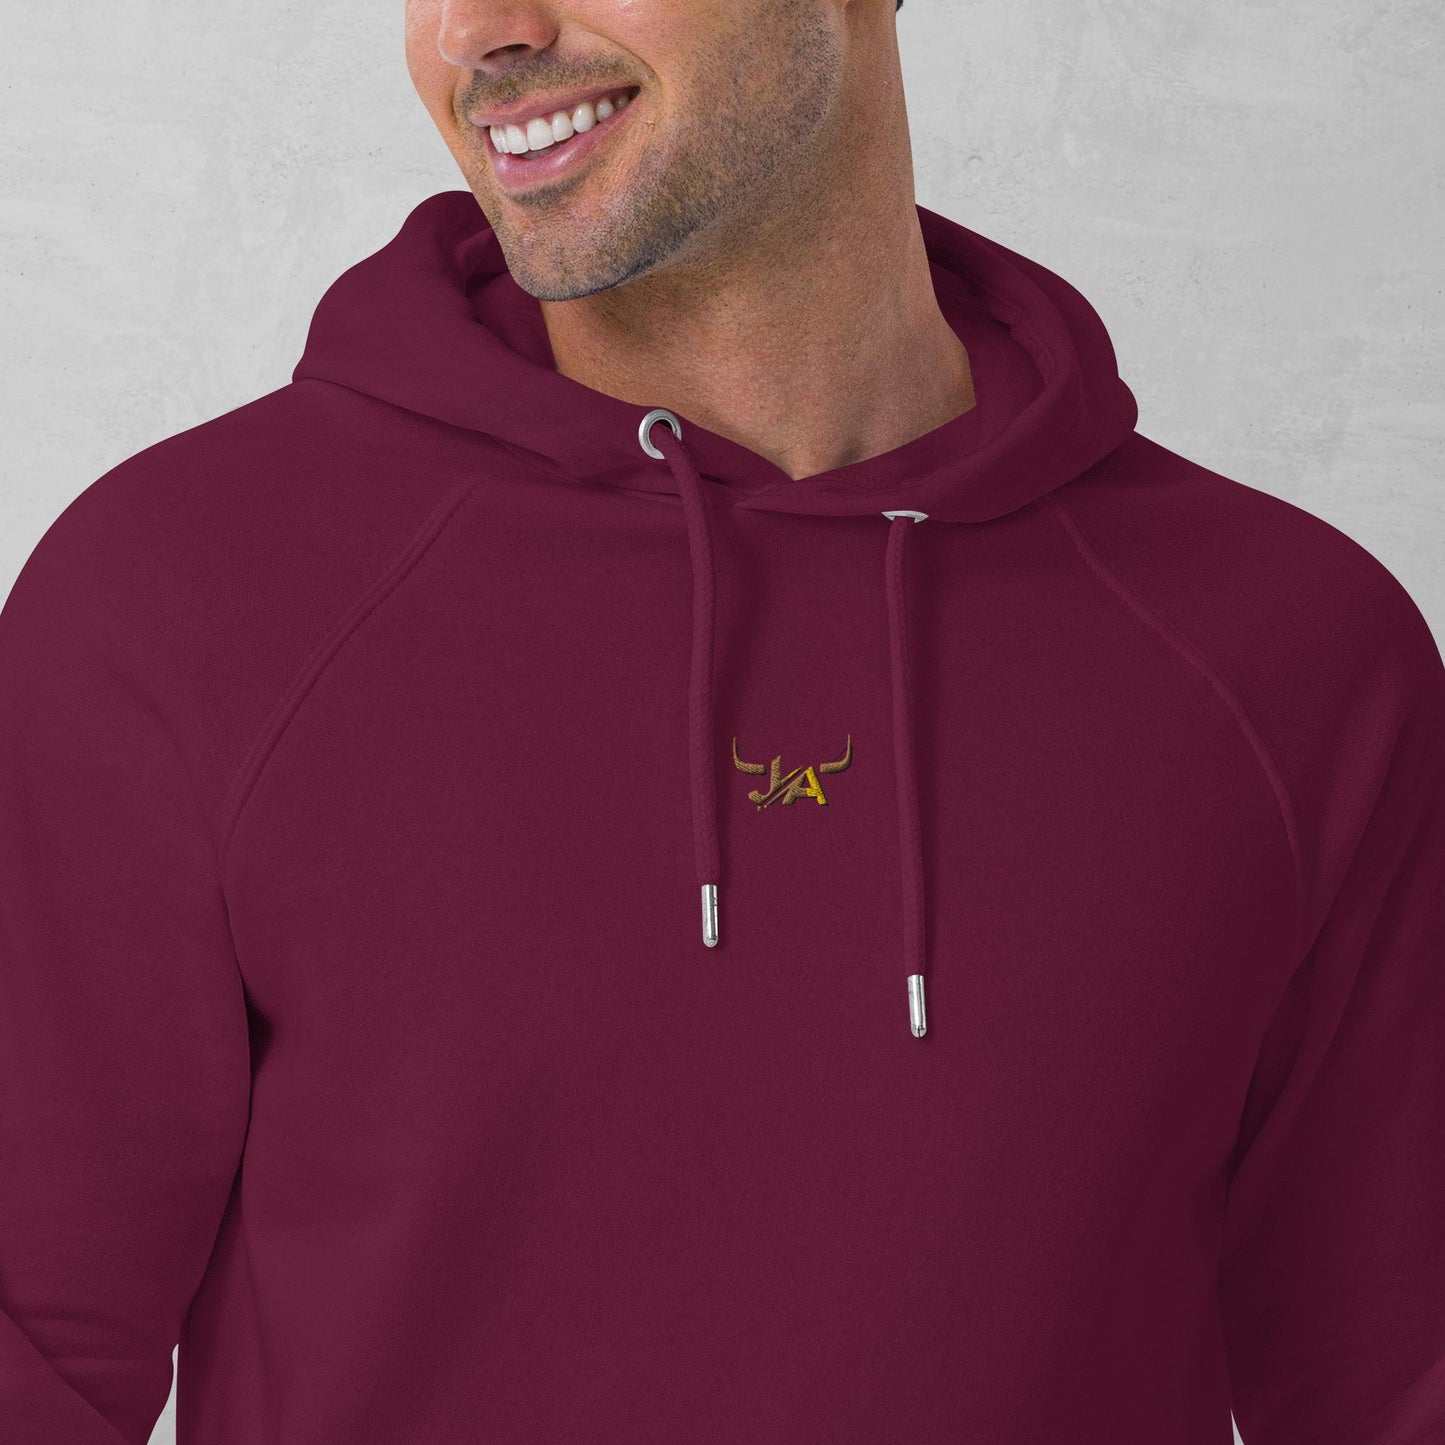 J.A Men's eco raglan hoodie